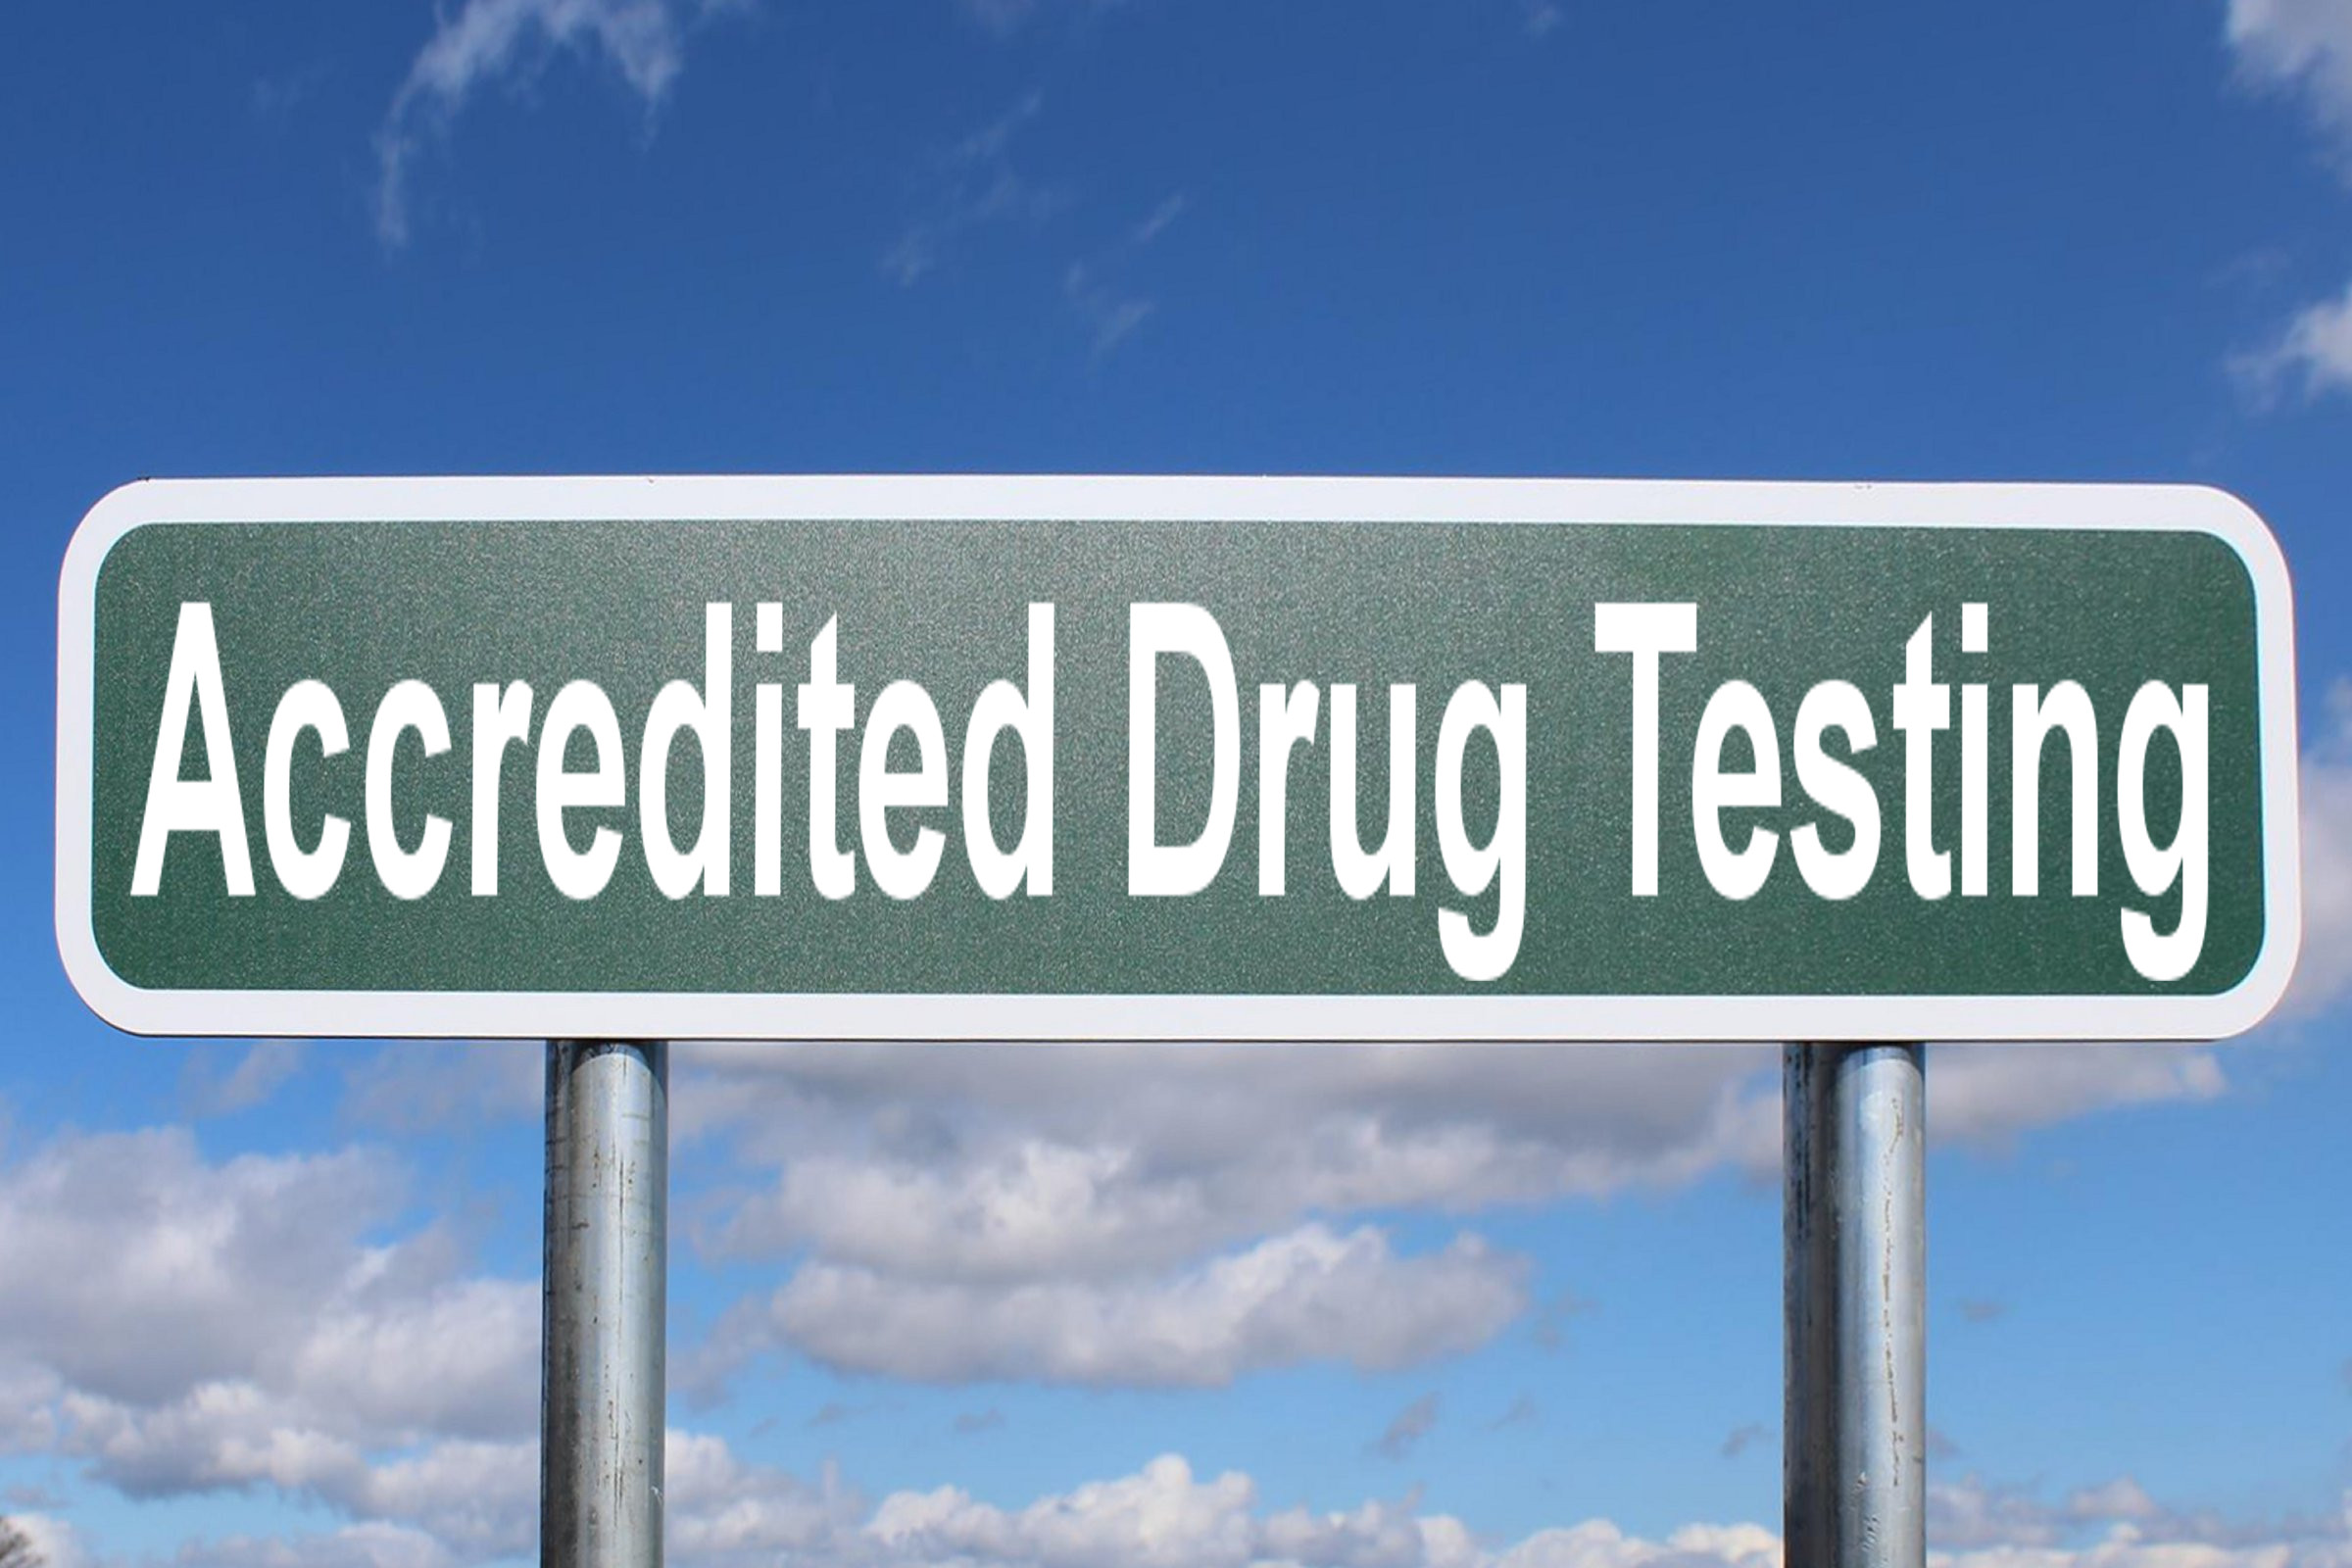 accredited drug testing